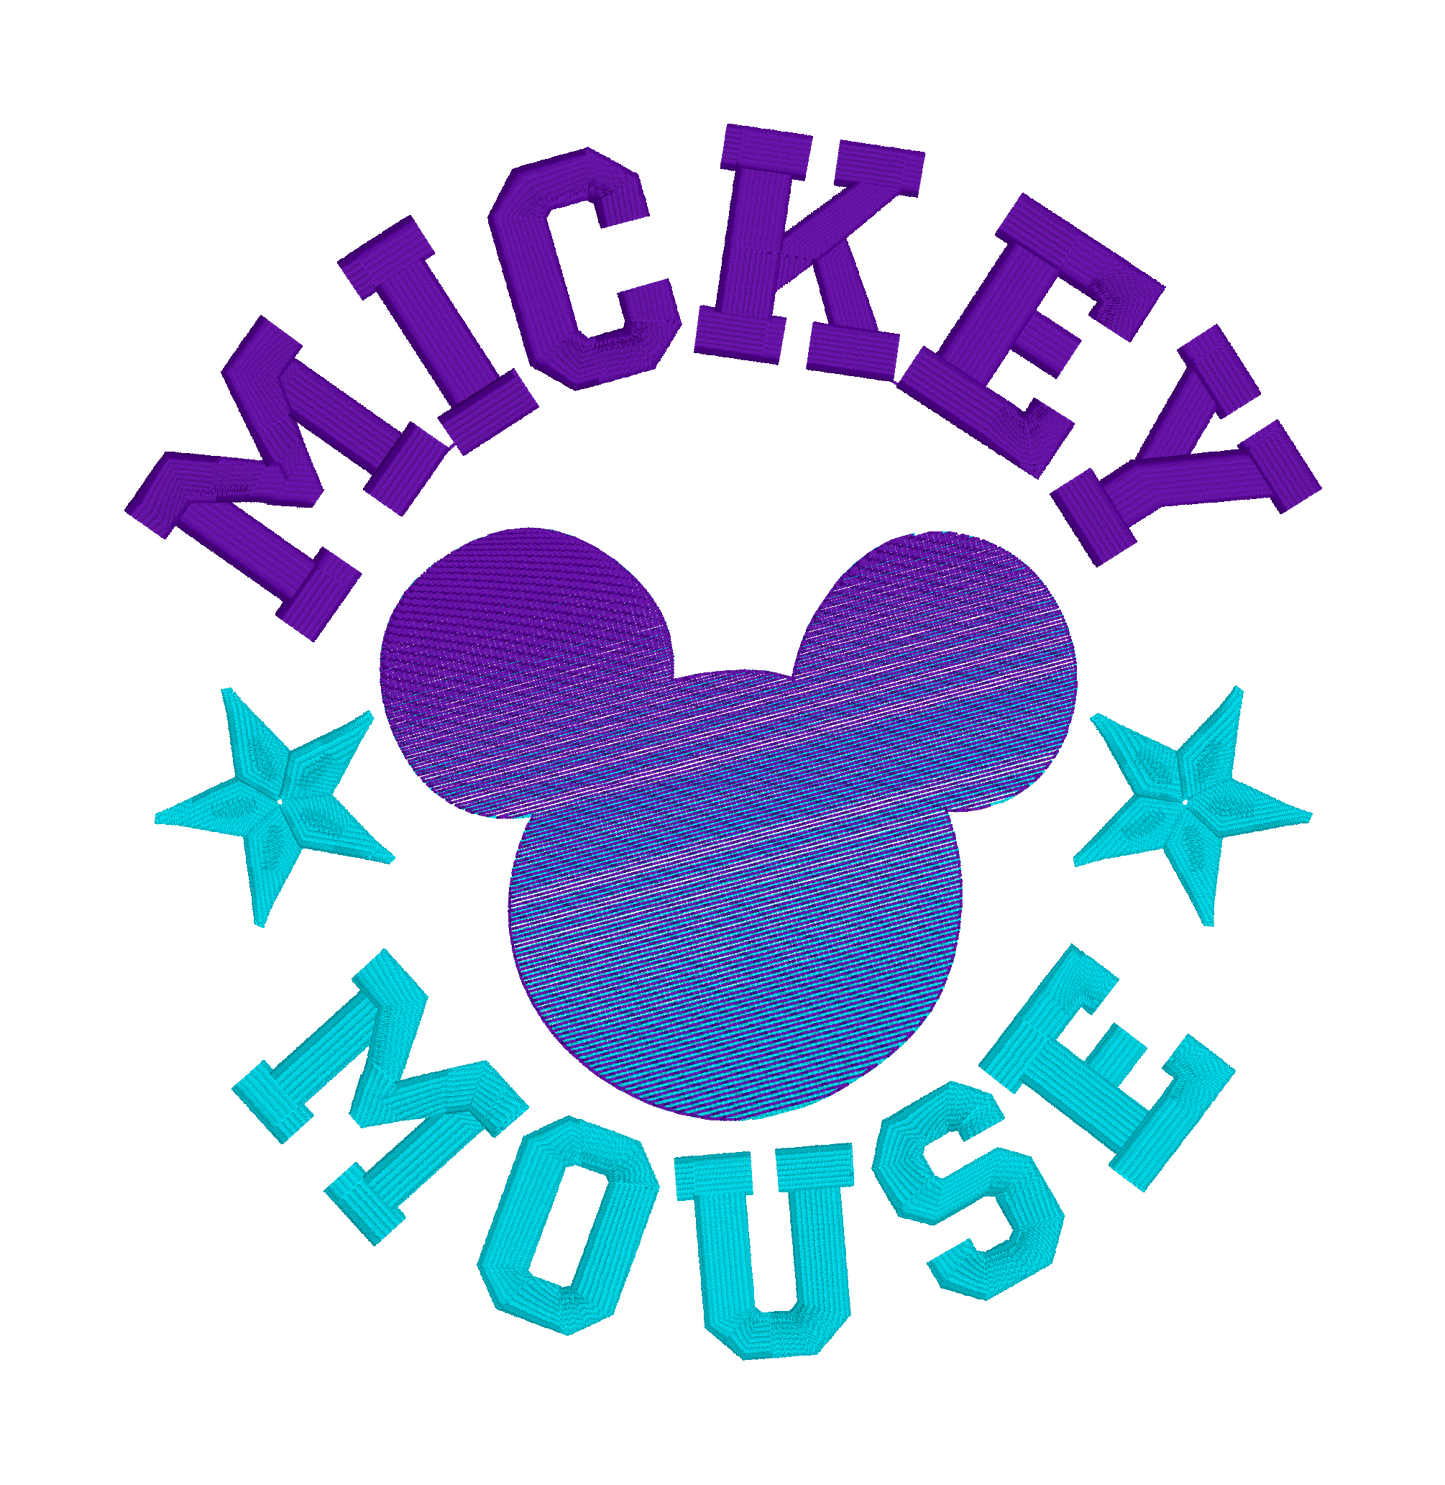 Pastel Mickey star ombre sweatshirt